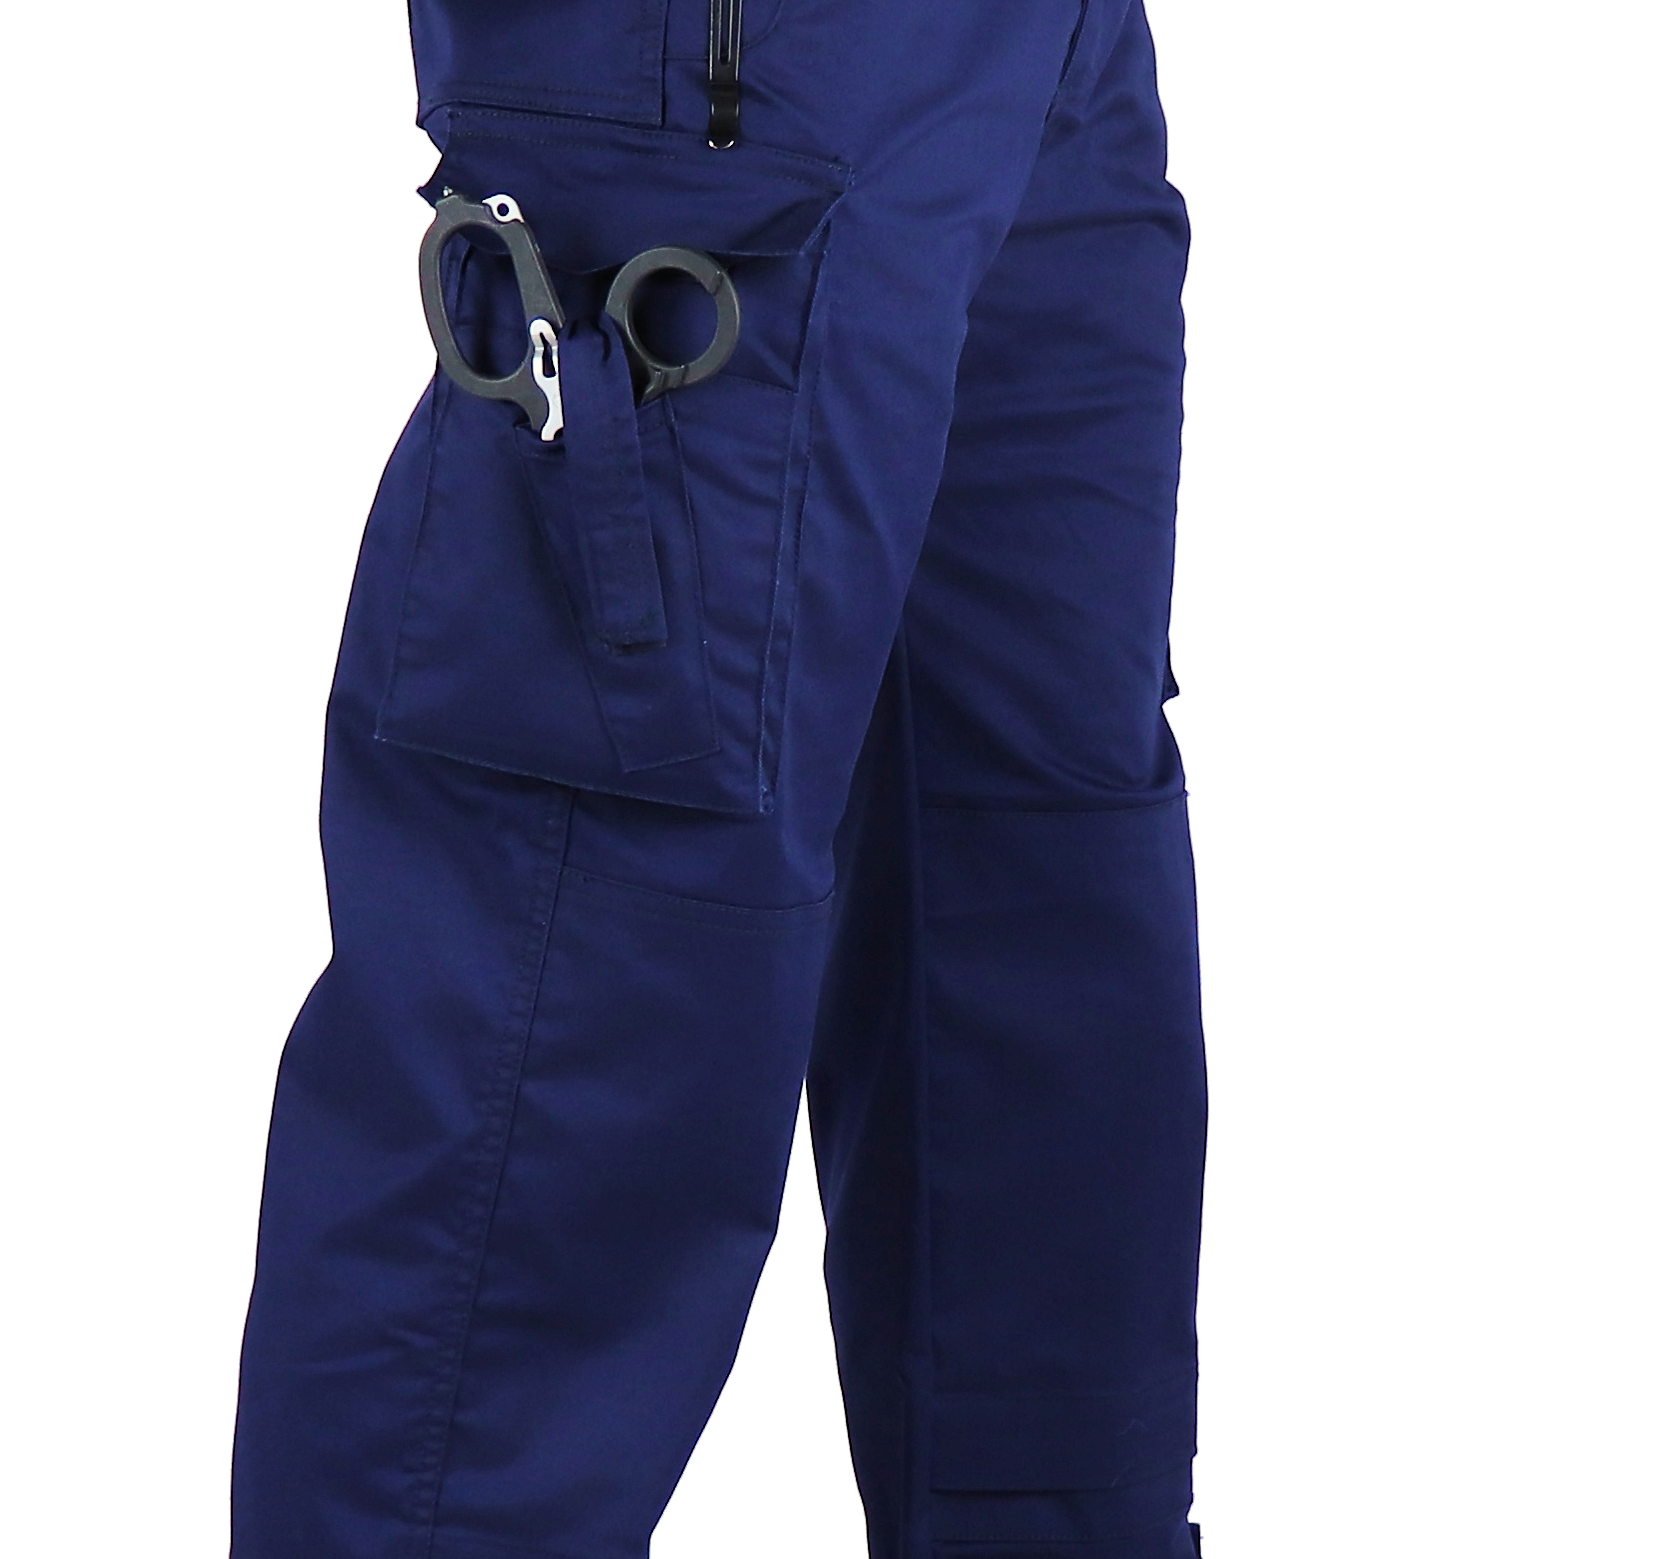 KALTgear EMT-TAC-Lite Pants